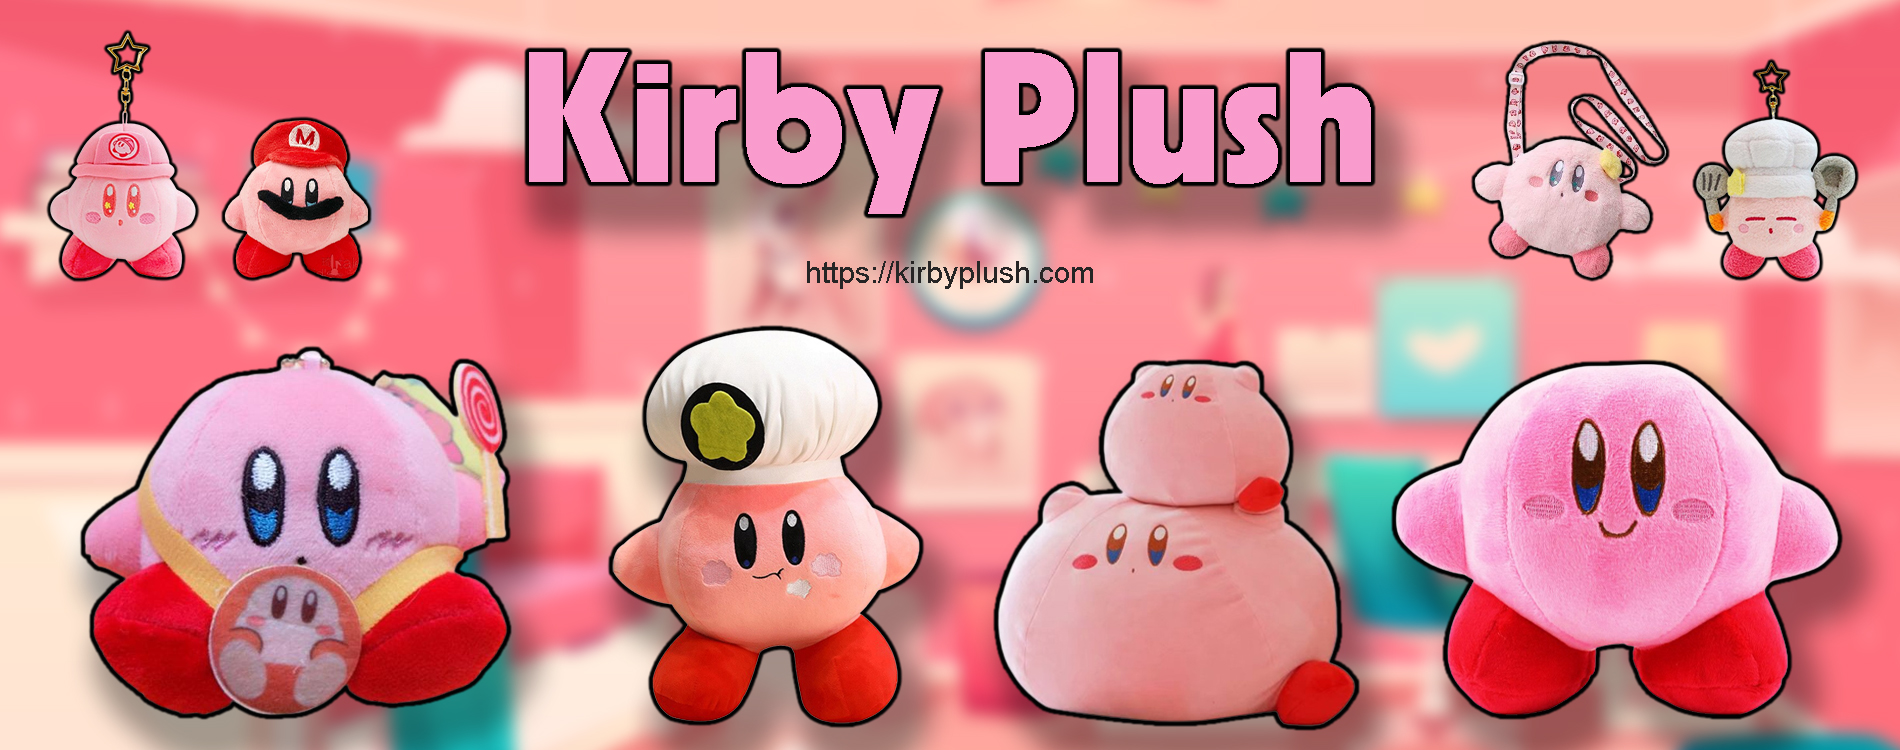 kirby-plush-banner